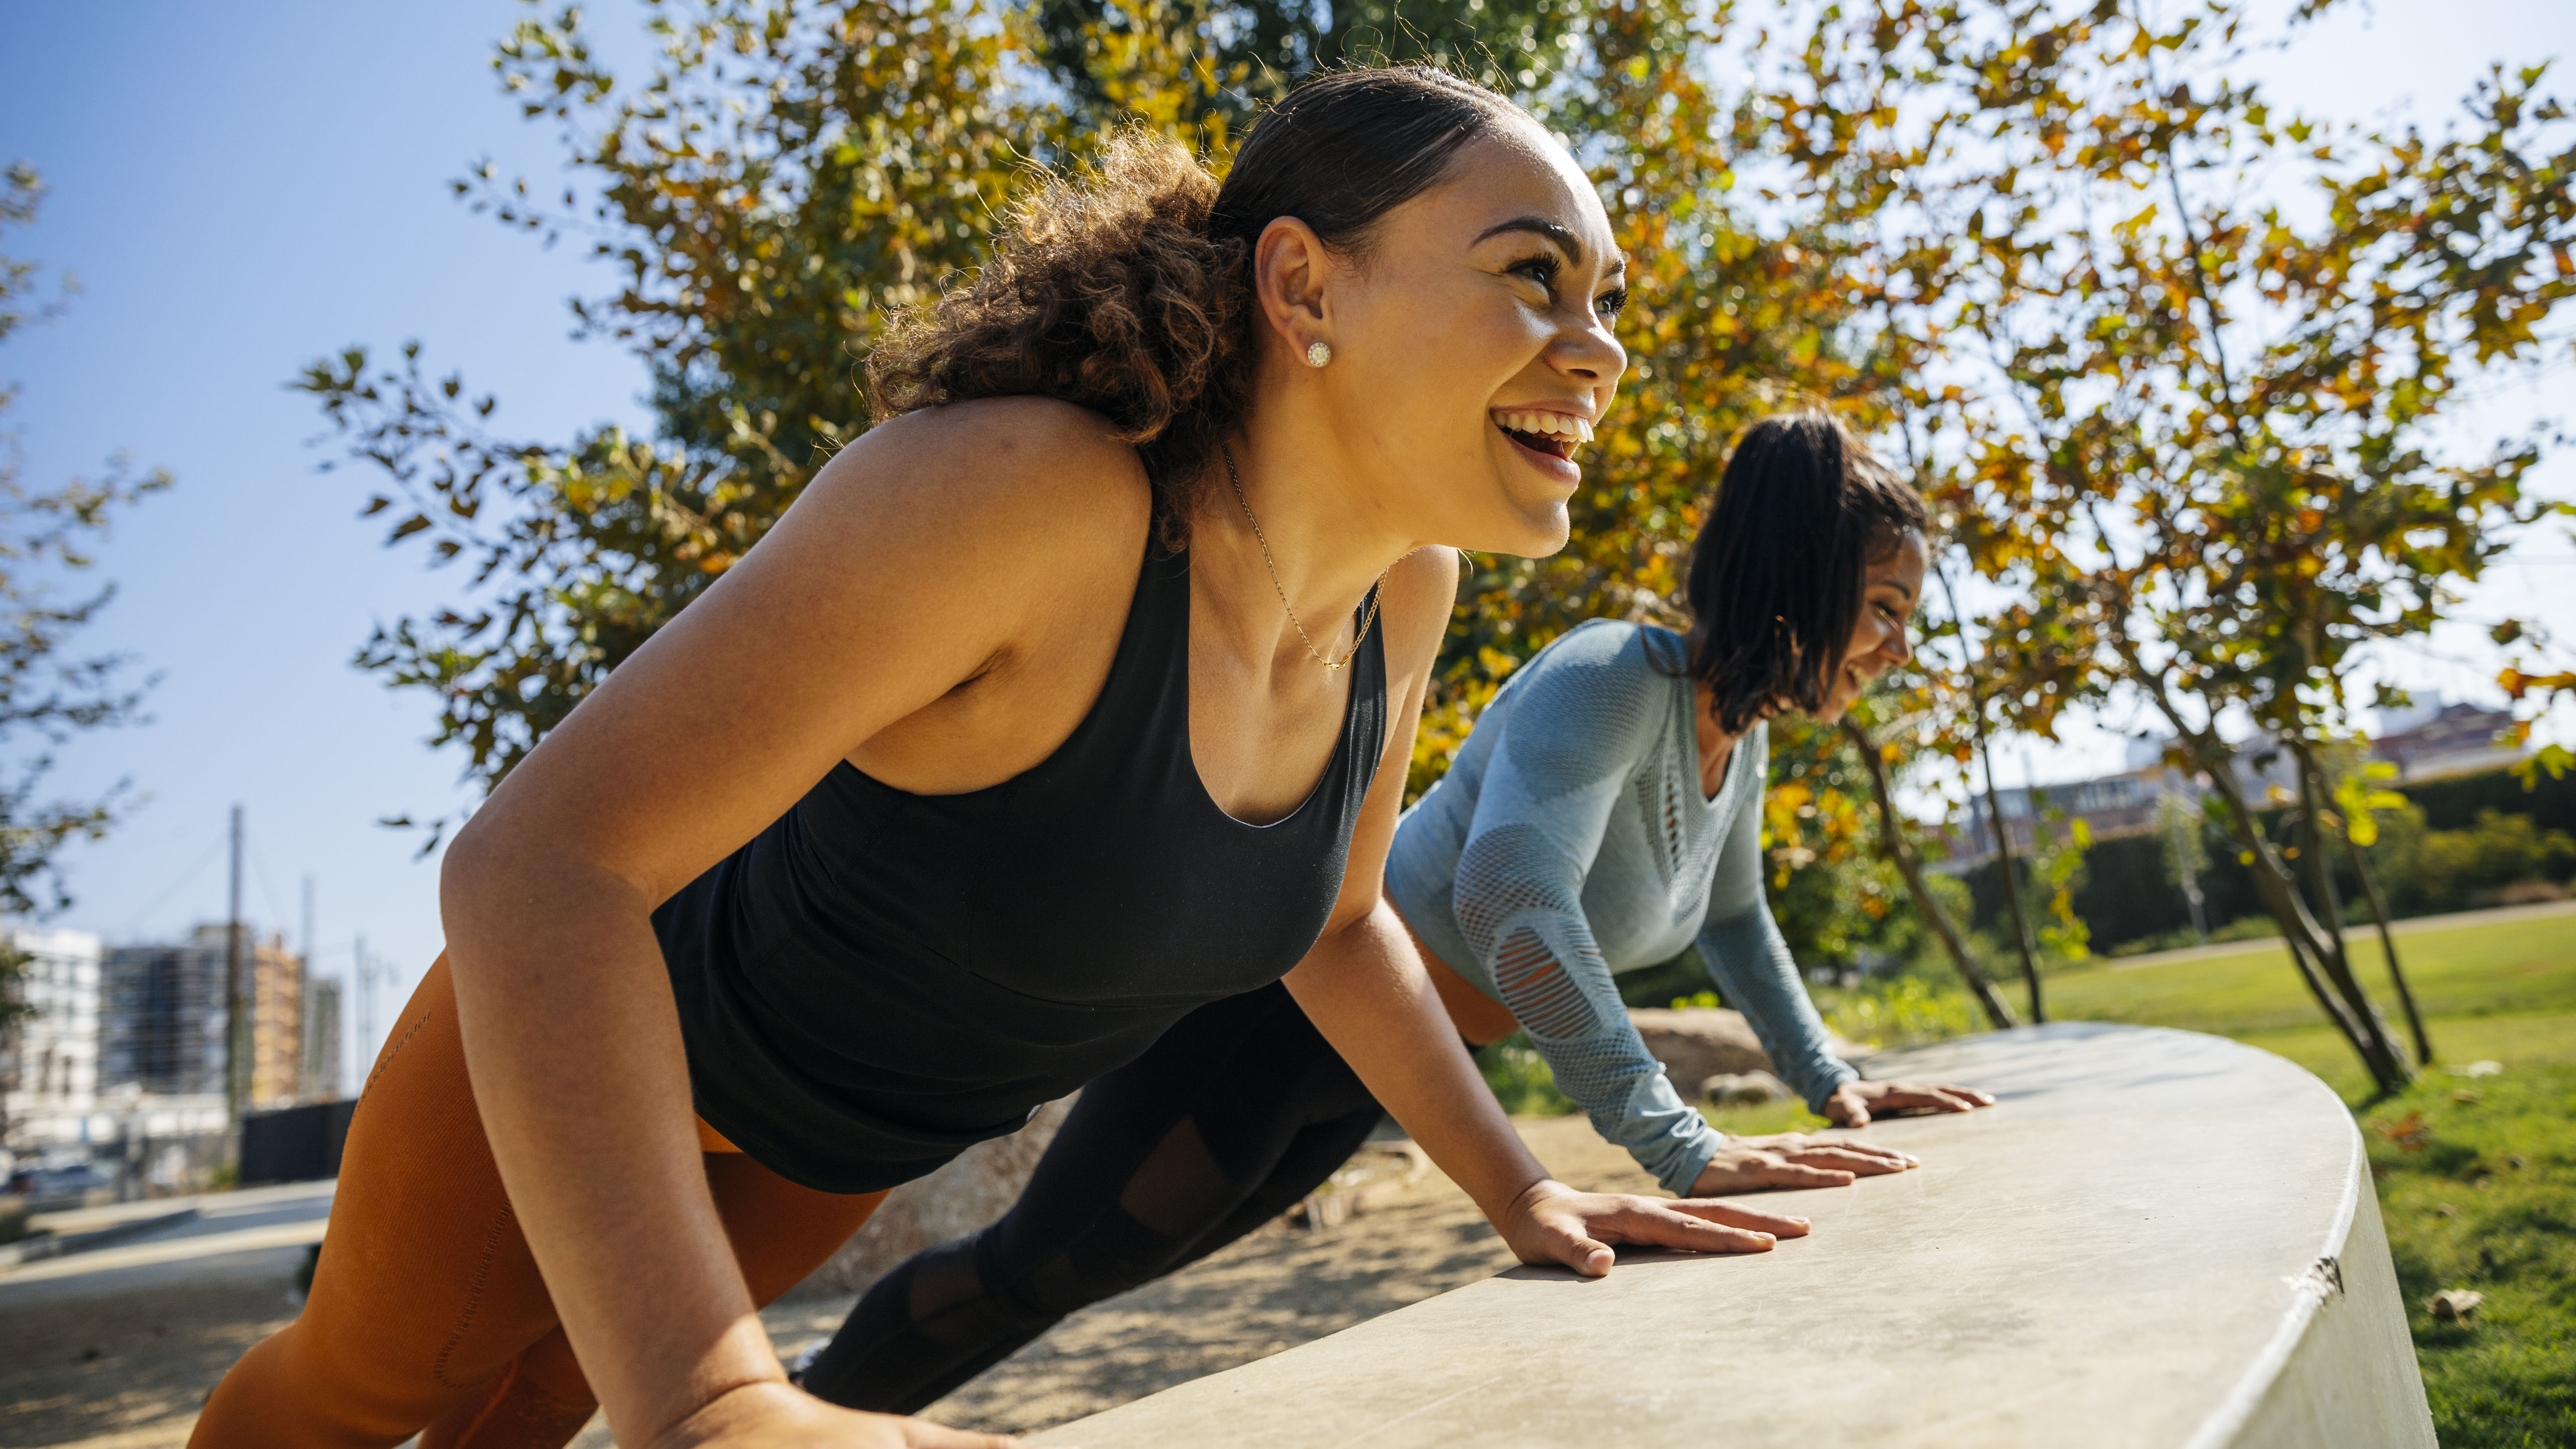 Women doing push-ups 30-day fitness challenge outside